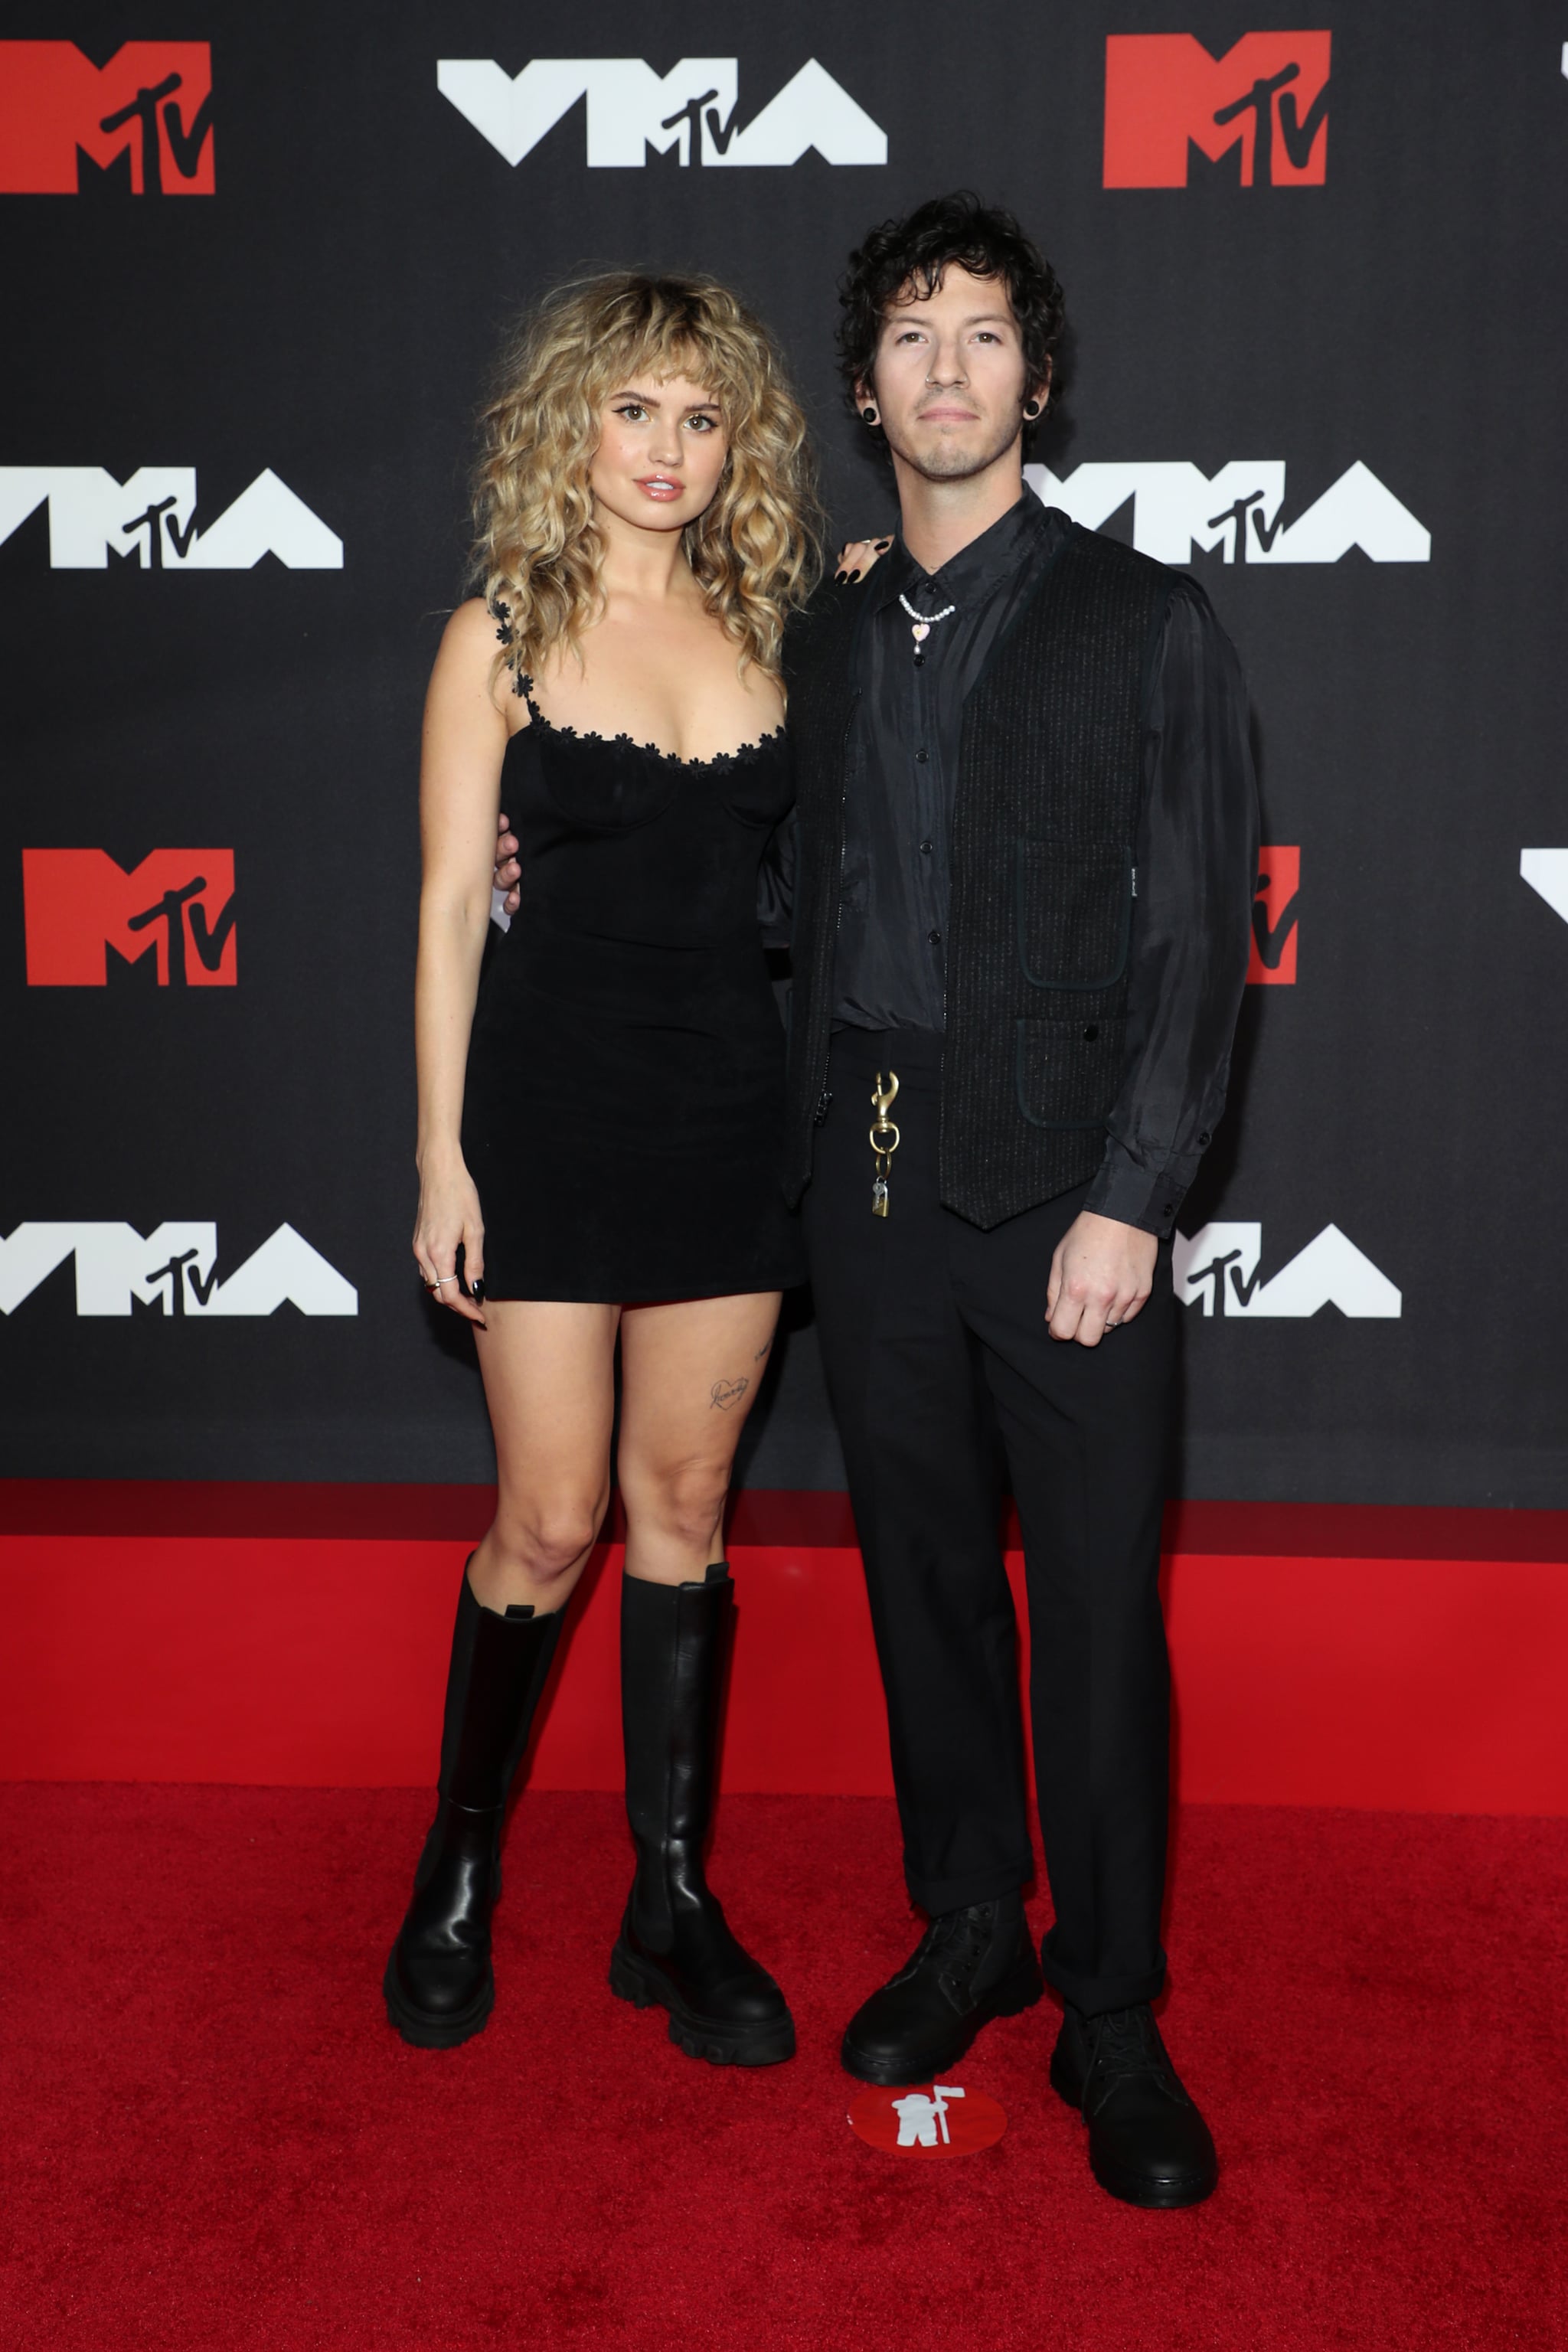 Debby with her husband, Twenty One Pilots star Josh Dun.